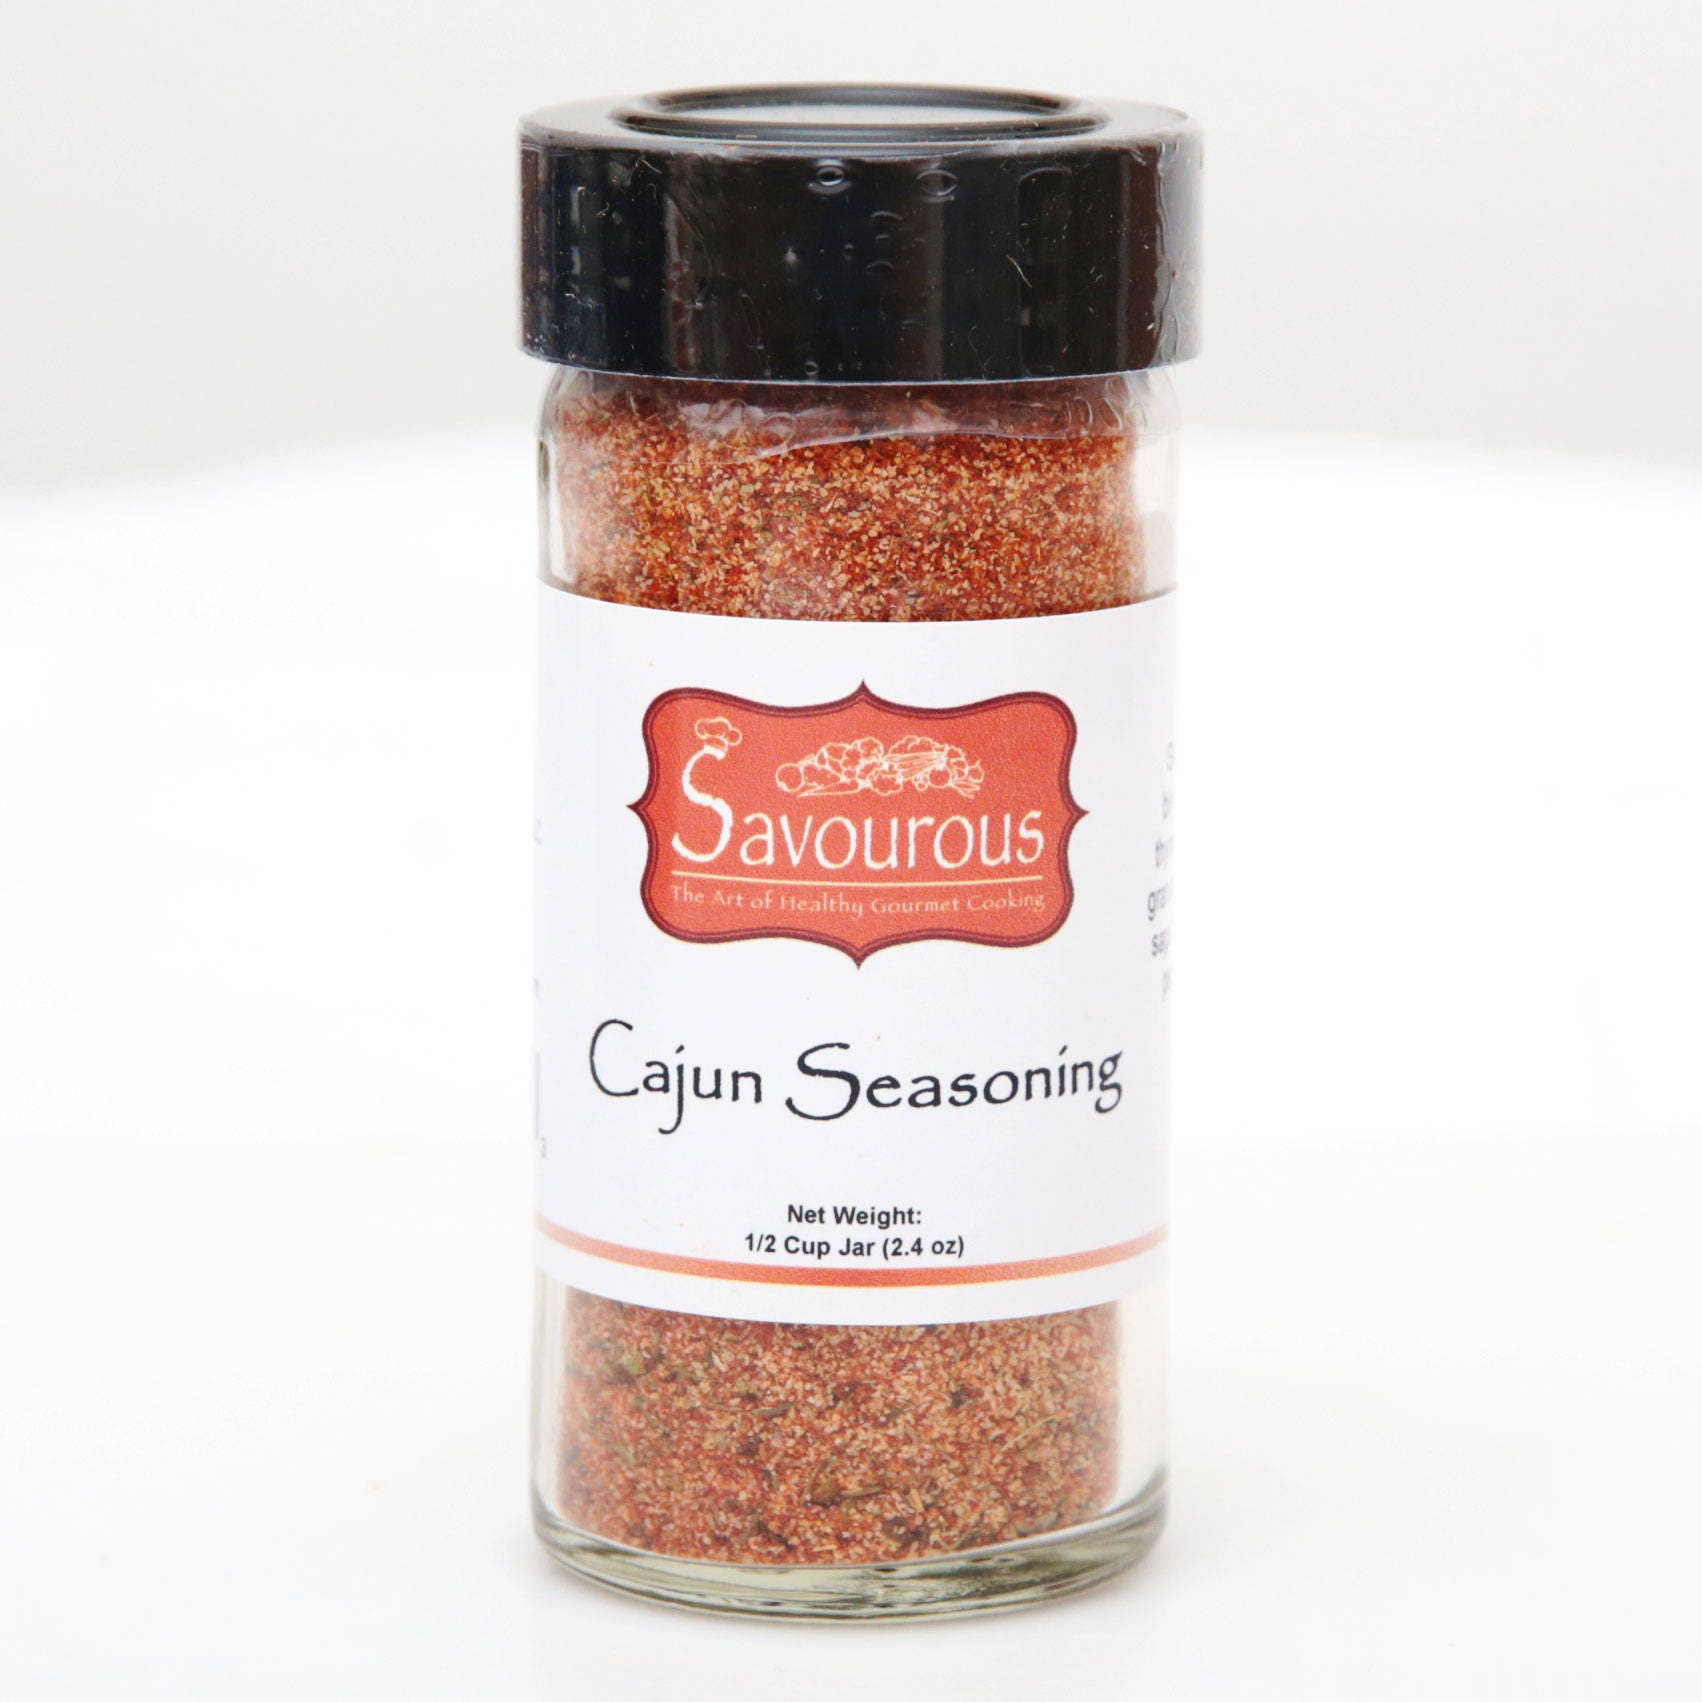 Salt Free Cajun Seasoning